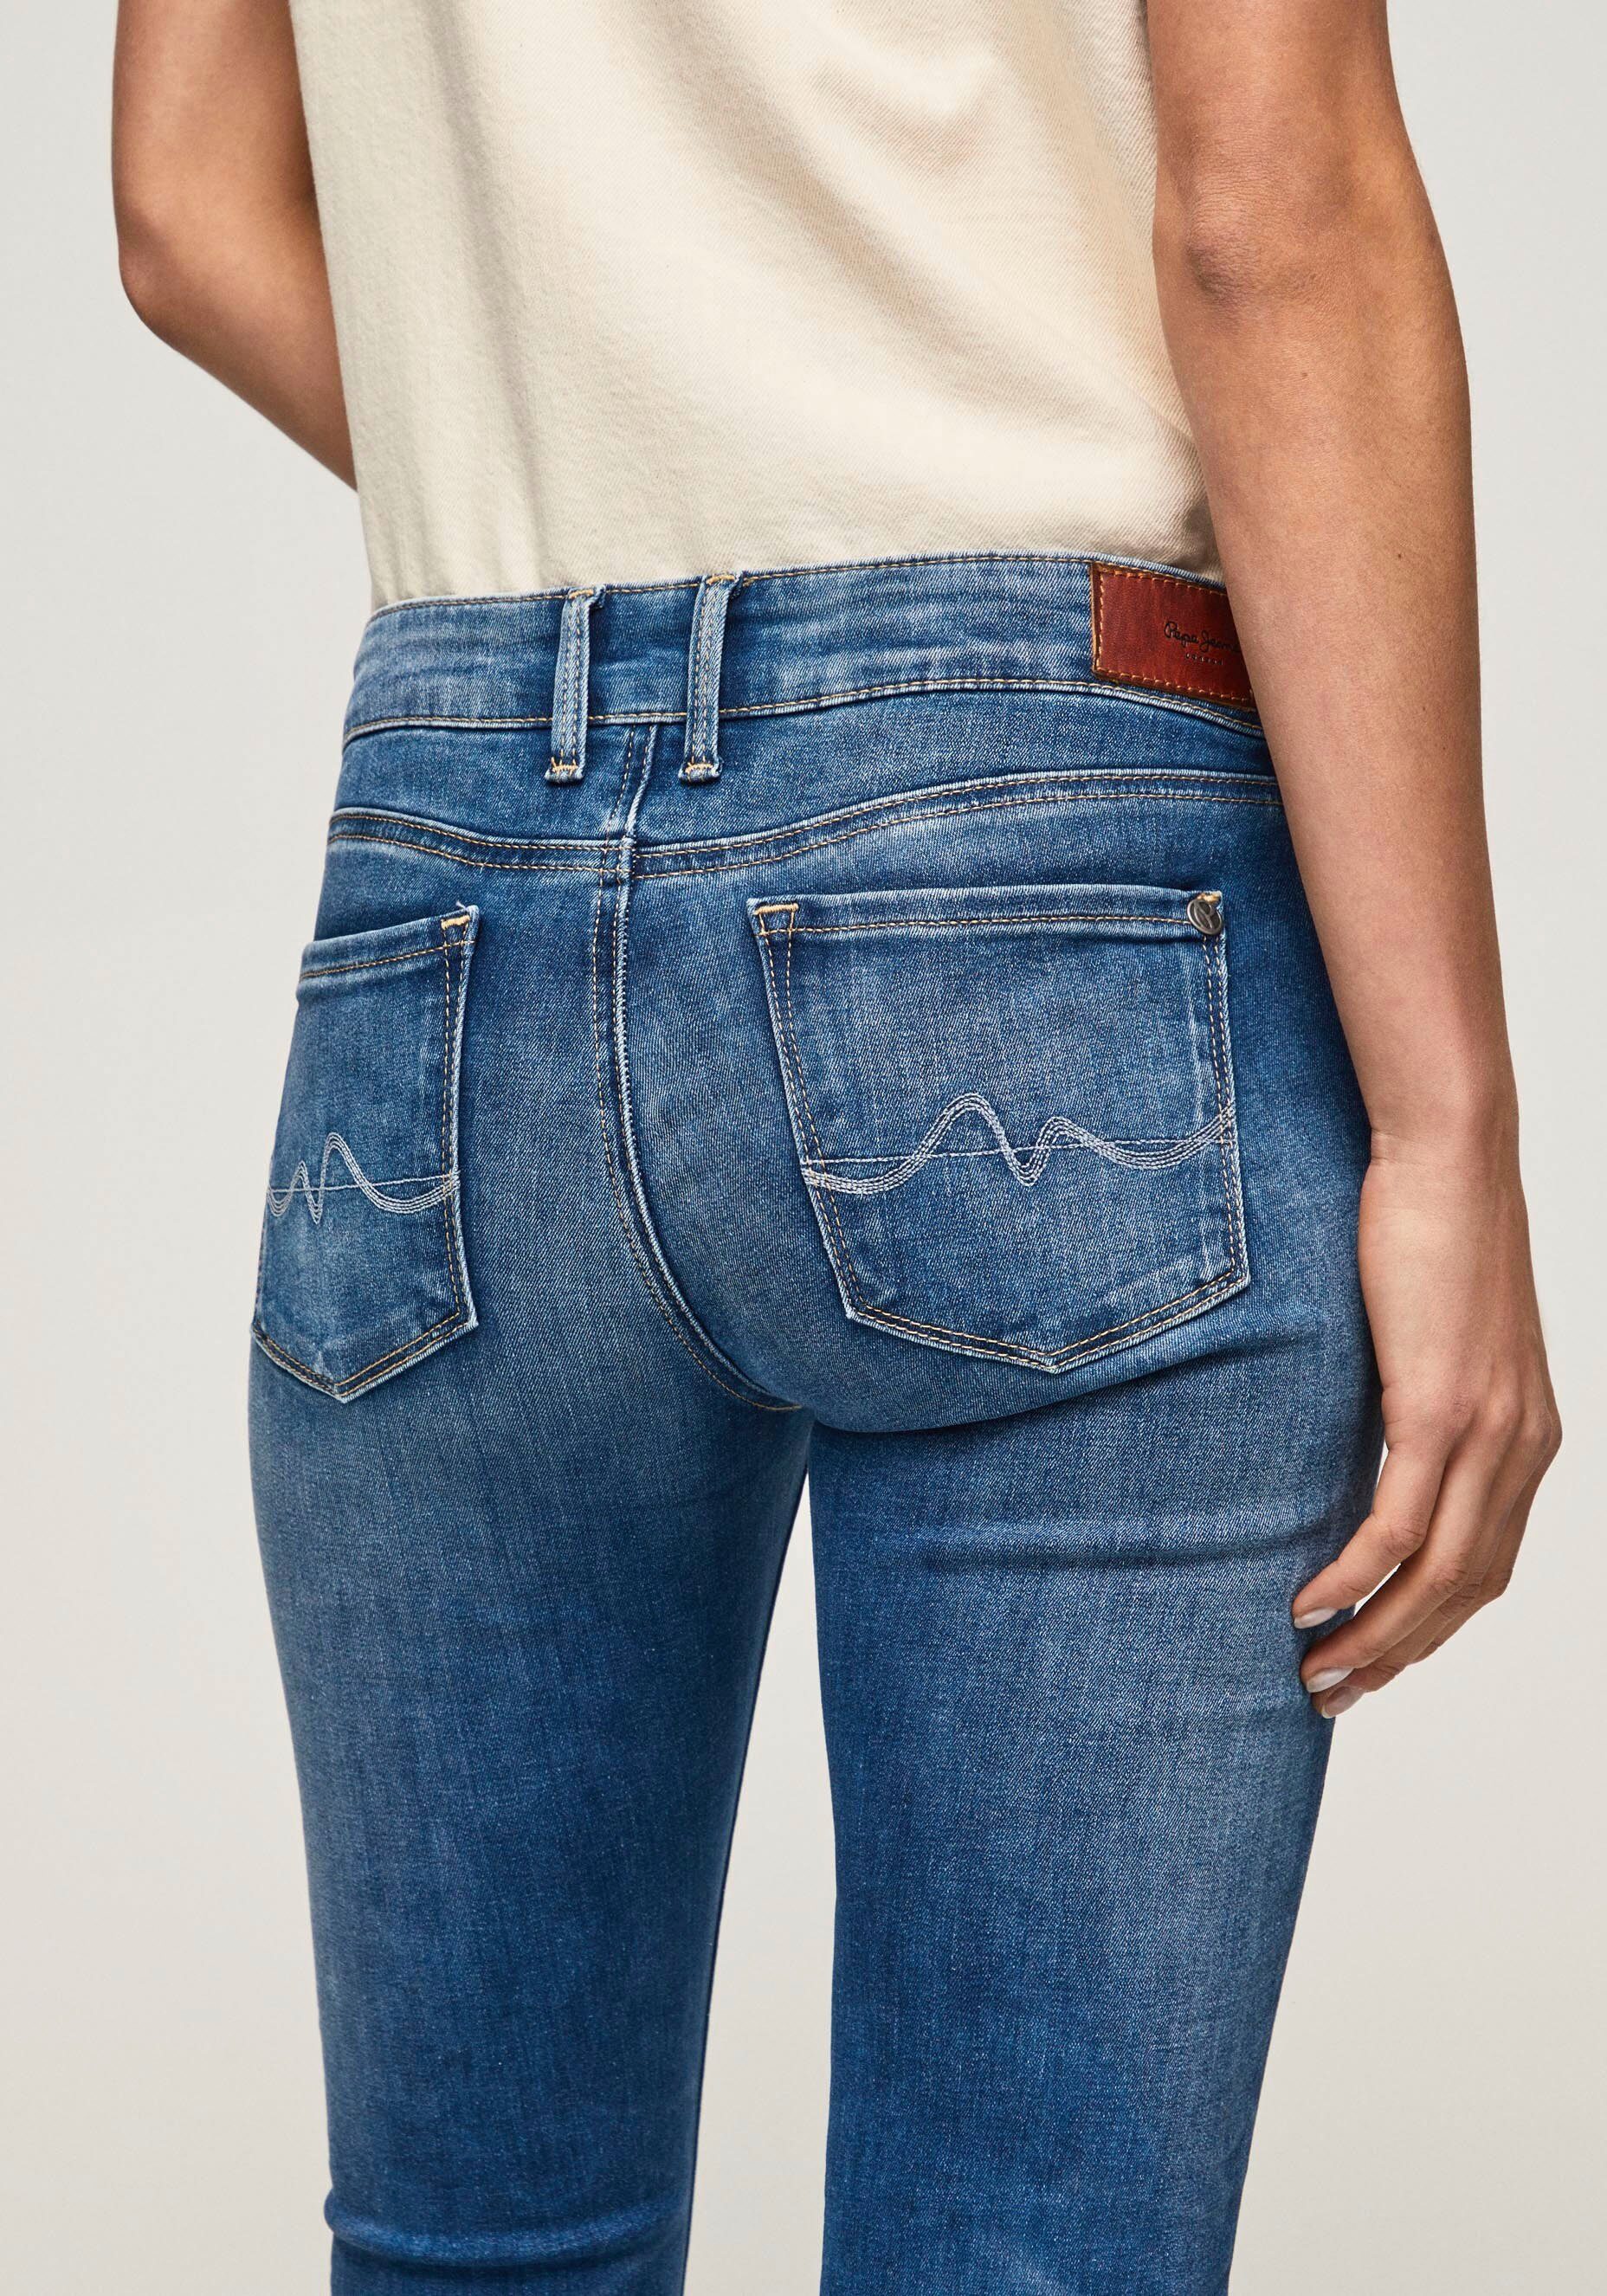 SOHO im 1-Knopf blue Bund mit und Stretch-Anteil Jeans Pepe Skinny-fit-Jeans 5-Pocket-Stil